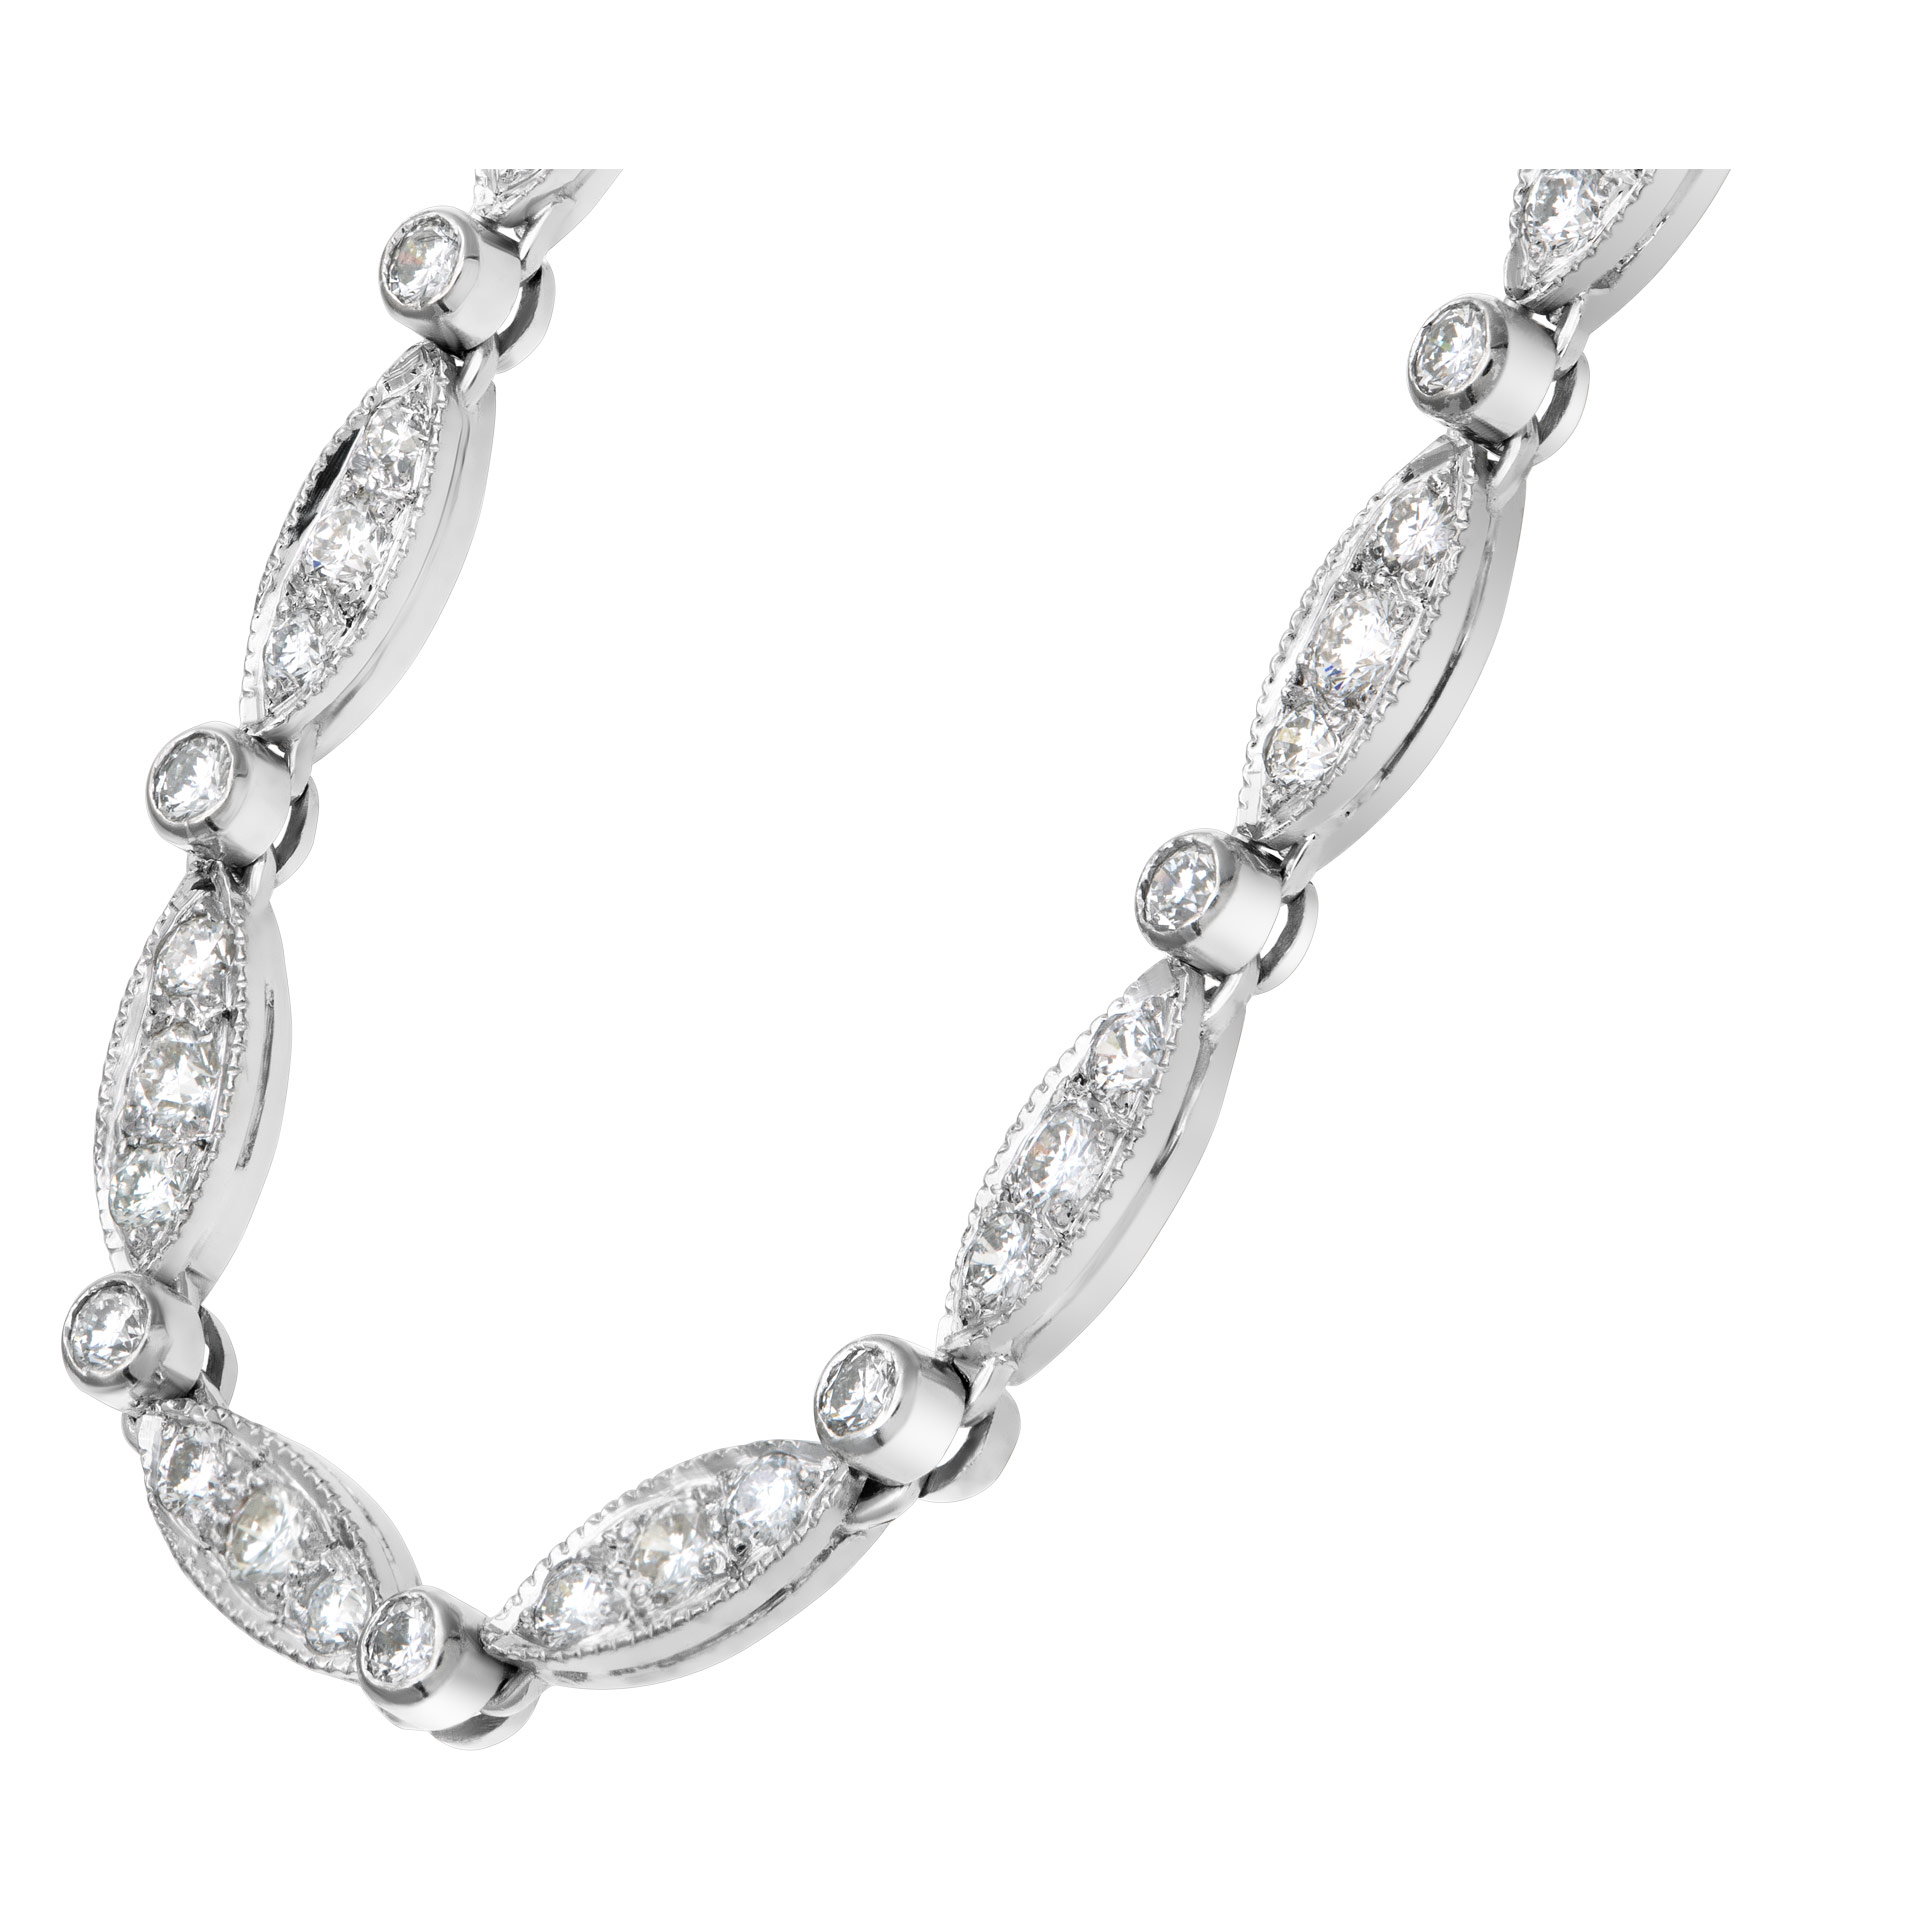 Diamond necklace in 18k white gold,  over 2 carats round brilliant cut diamonds image 2